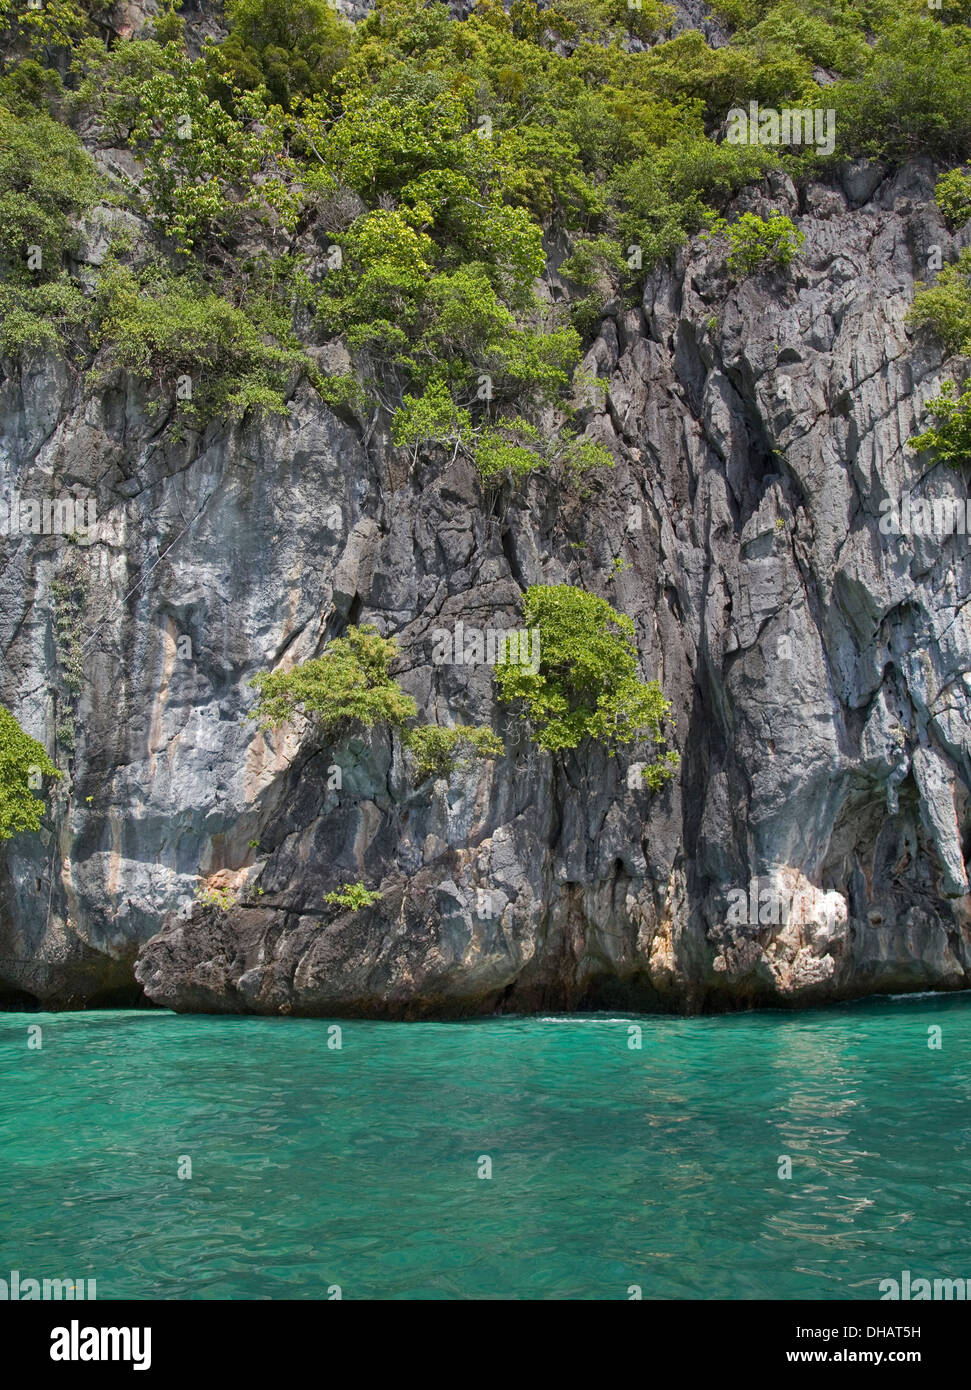 Tropical, transparente, buceo, mar, tropical, Tailandia, acantilados, vegetación, verano, caliente, claro Foto de stock